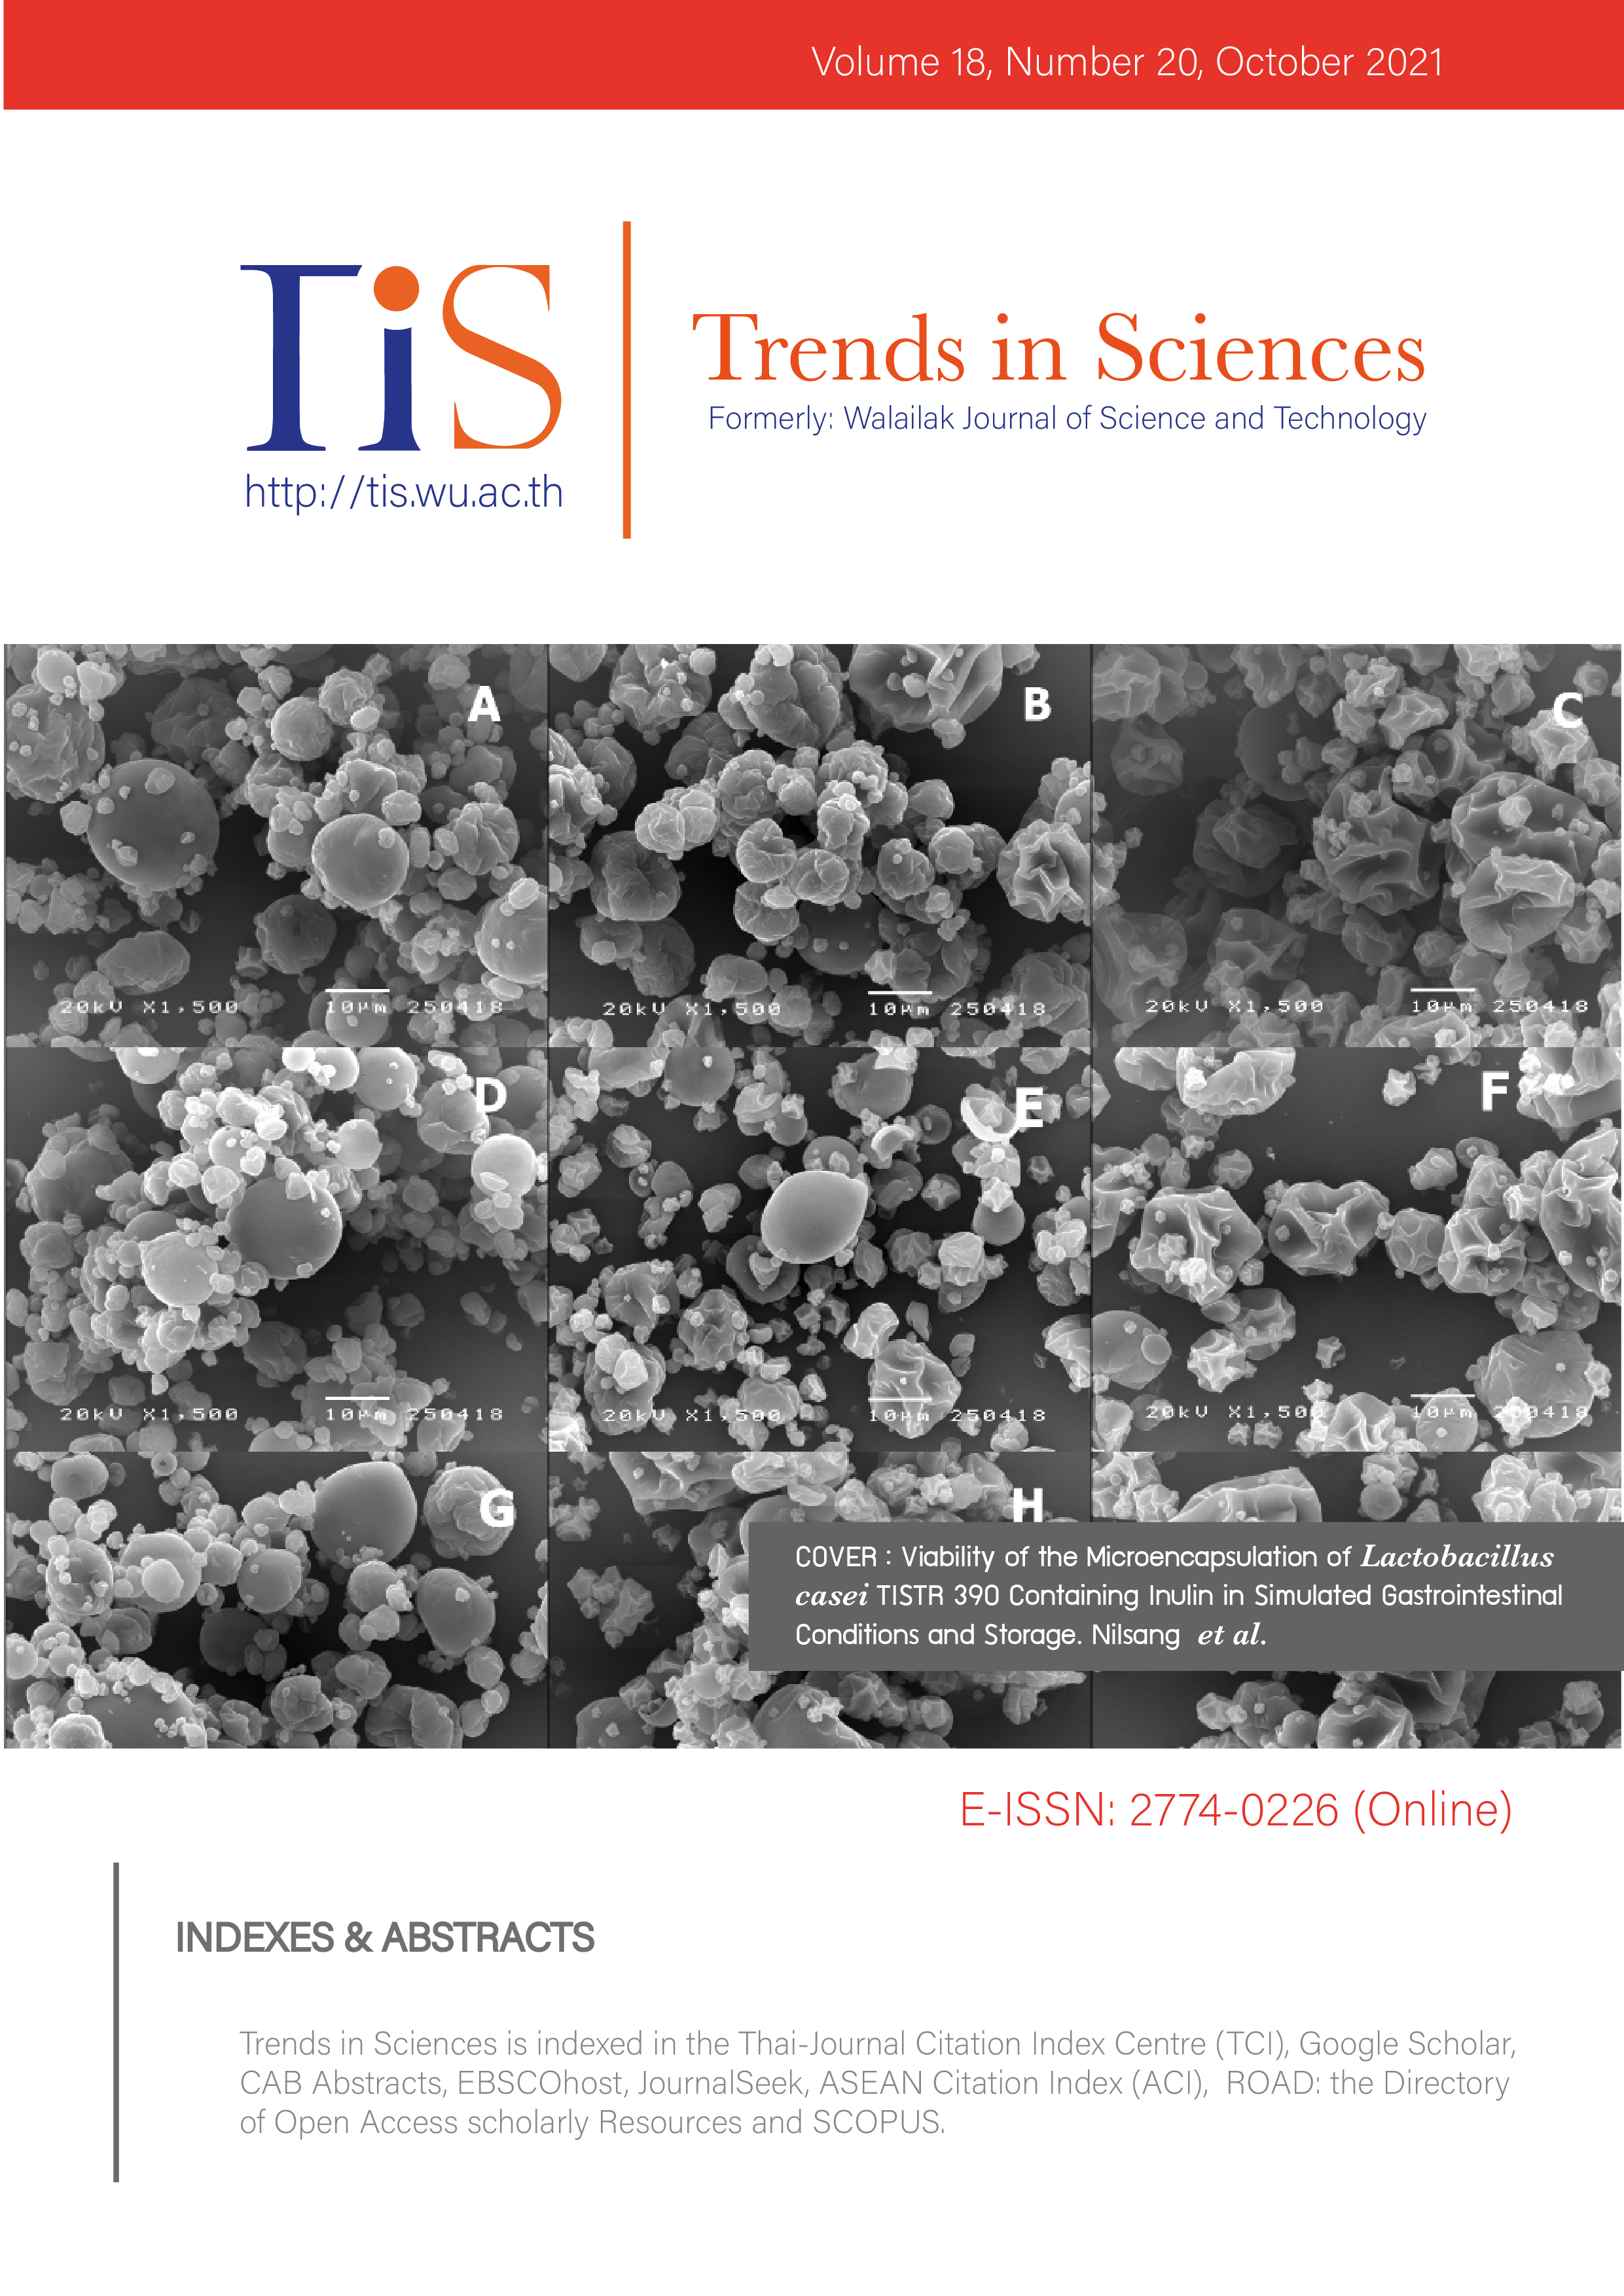 					View Vol. 18 No. 20 (2021): Trends in Sciences, Volume 18, Number 20, 15 October 2021
				